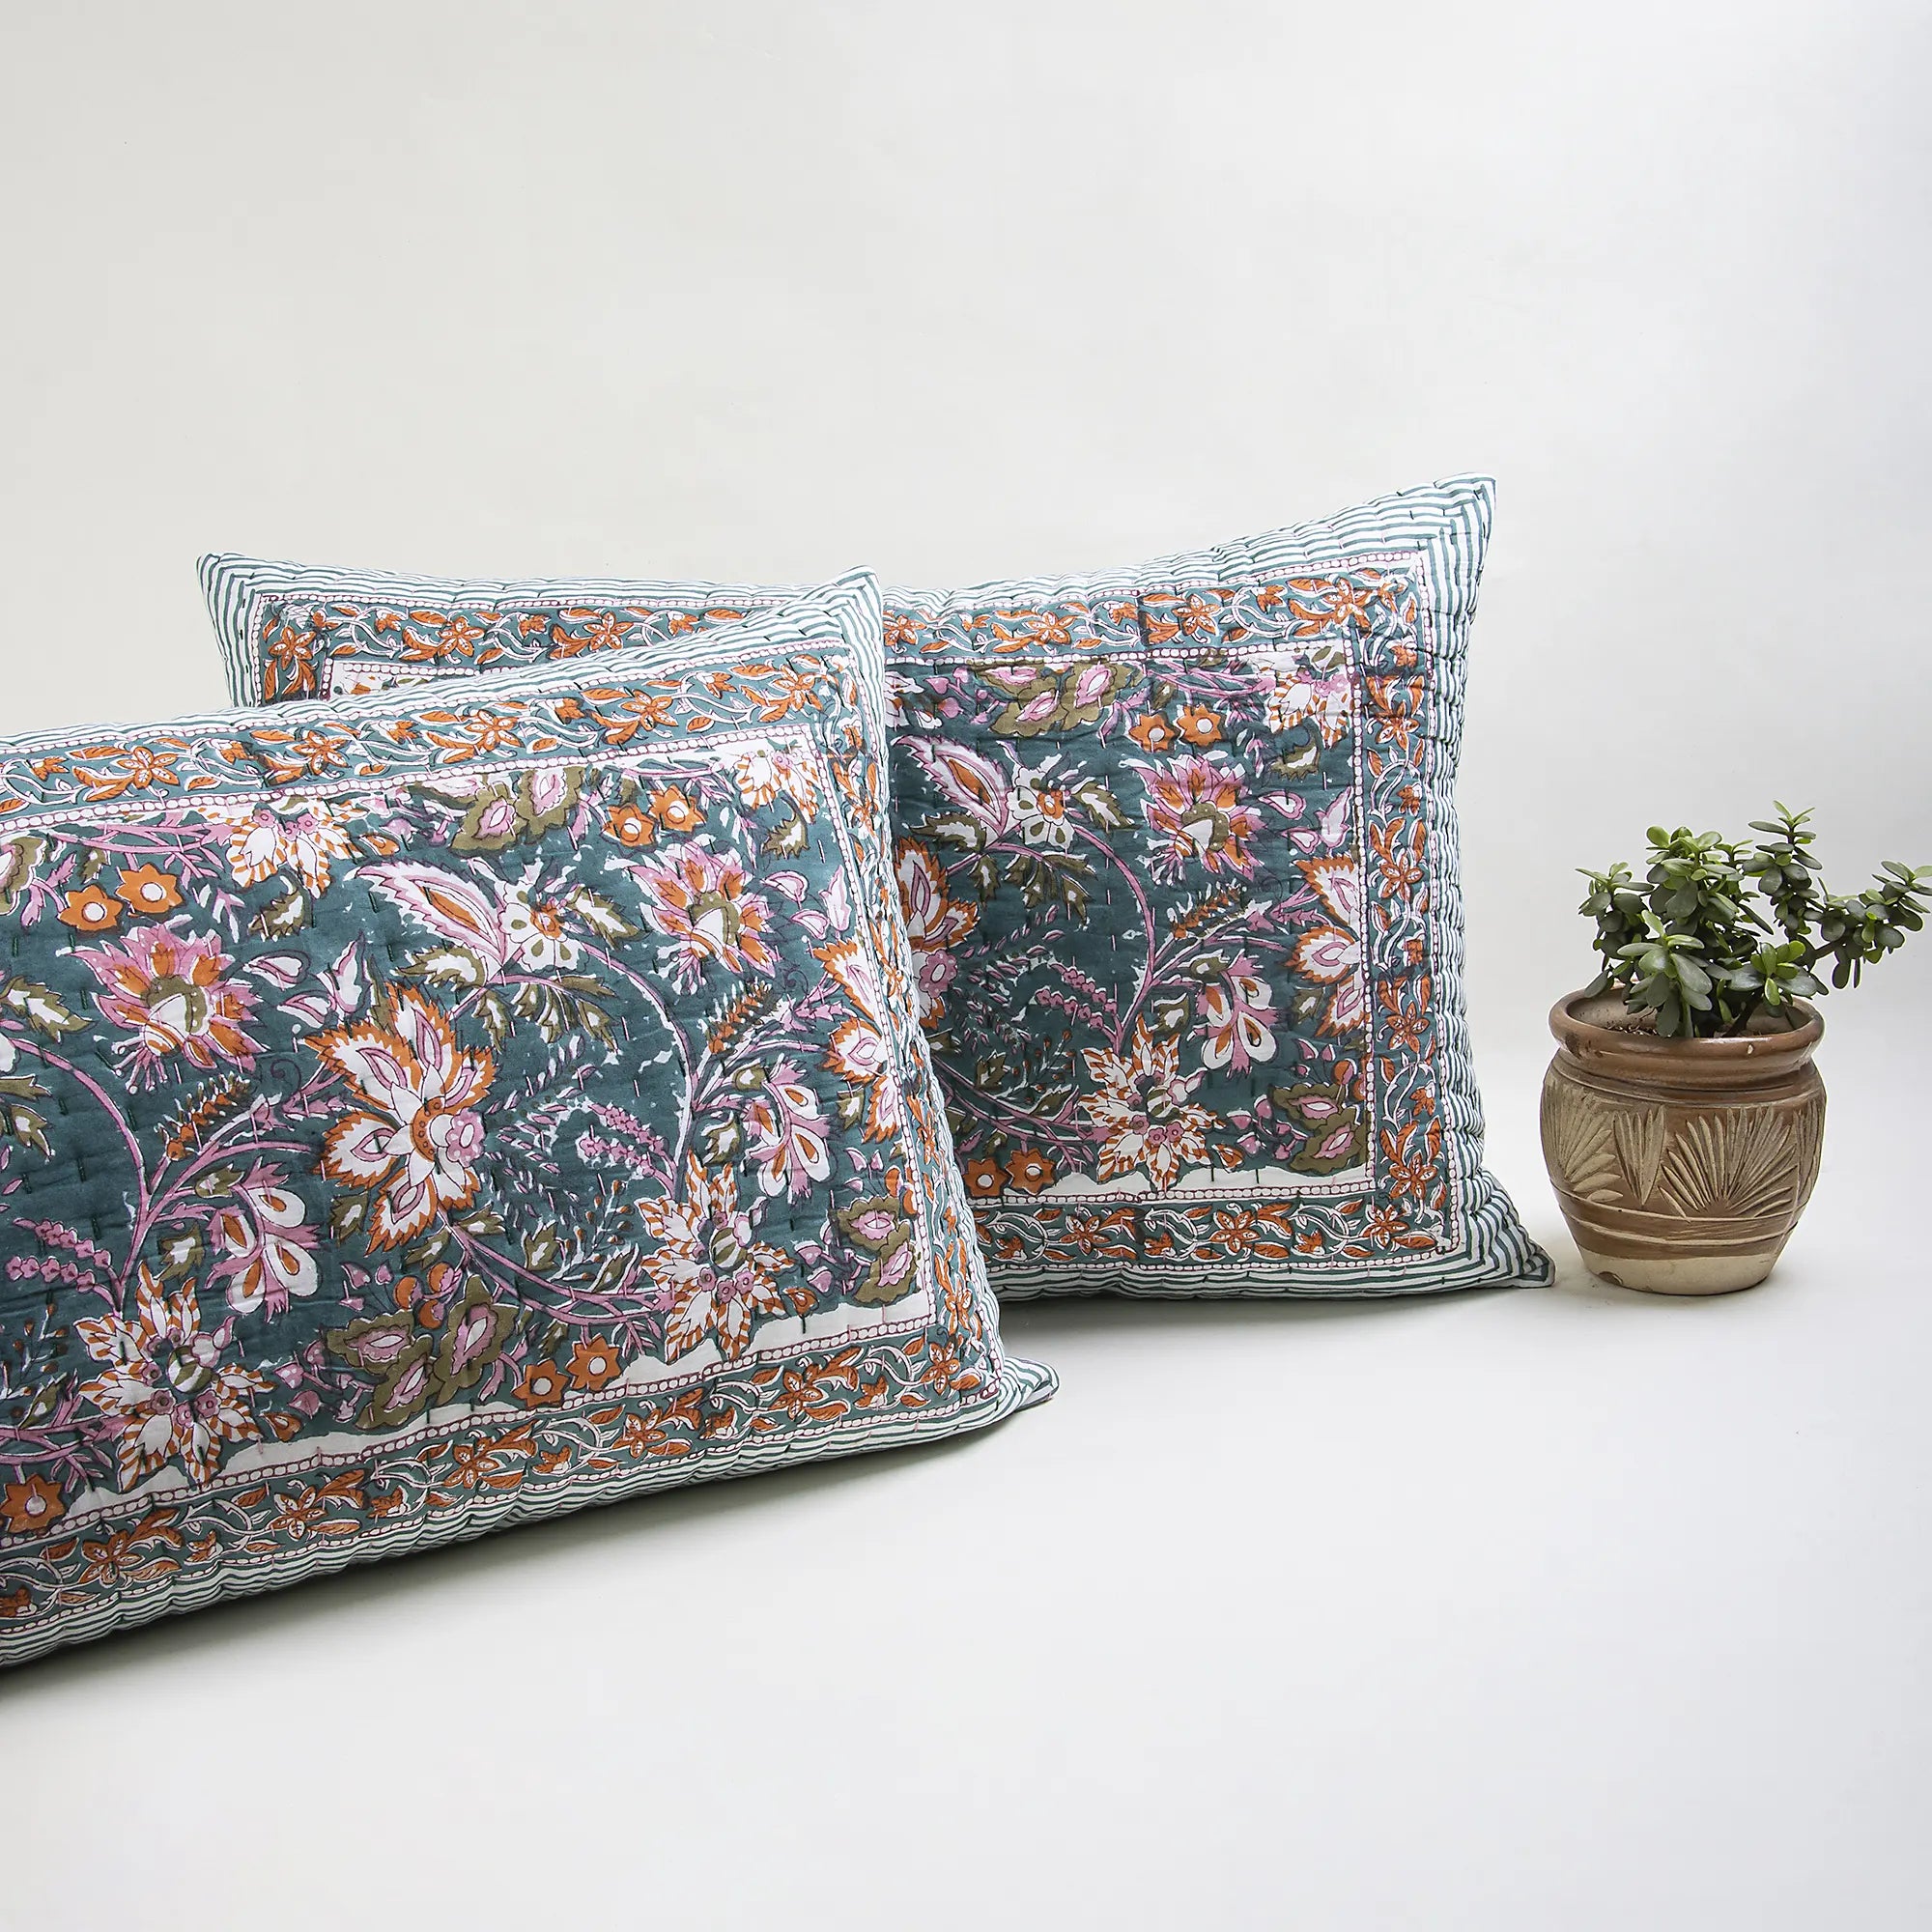 Cotton jaipuri kantha Quilts Multicolor Floral Pattern